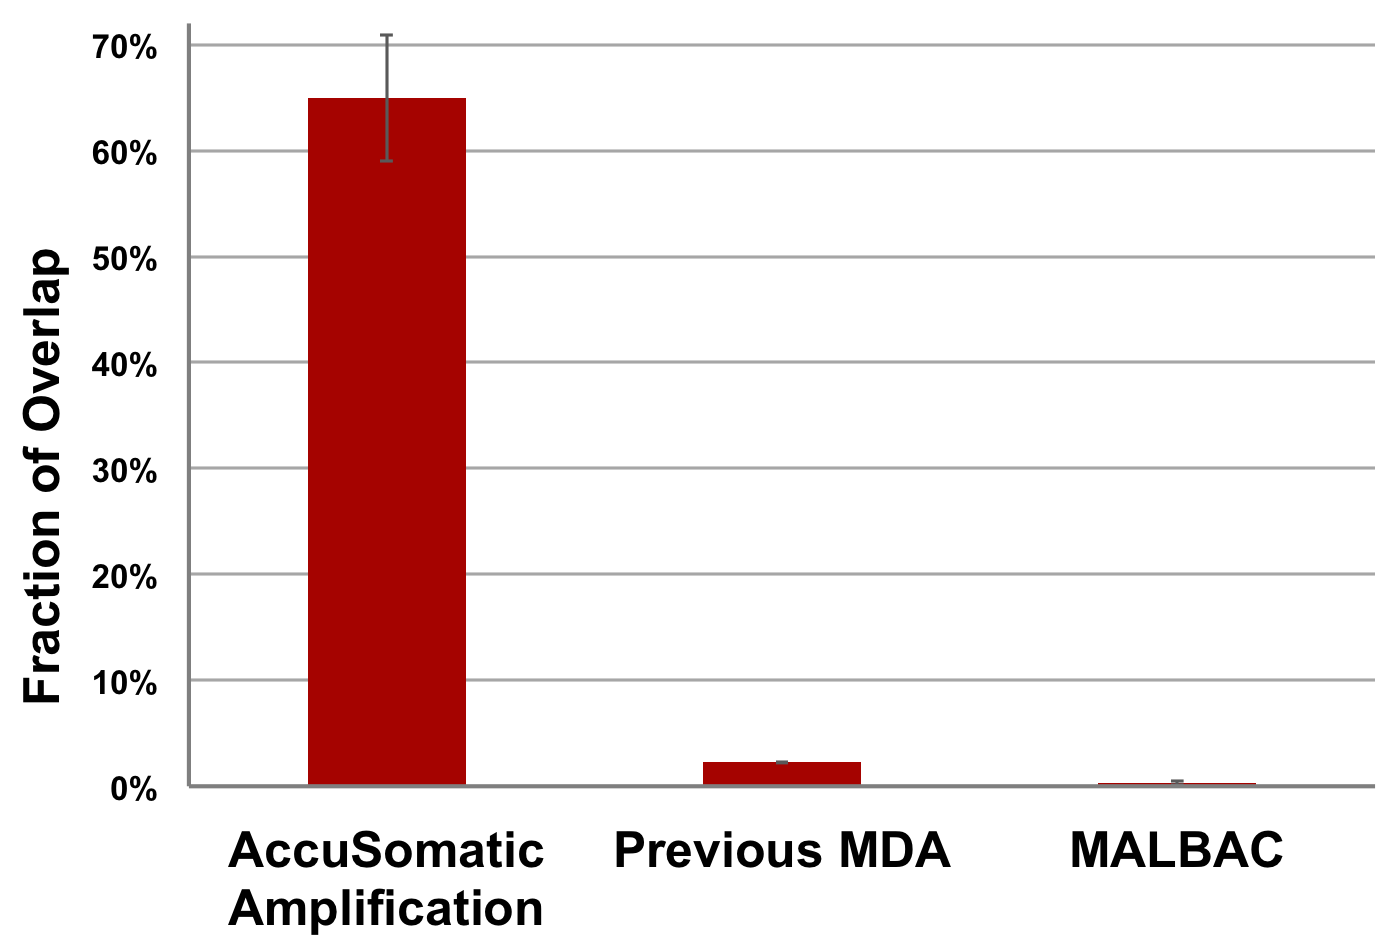 Comparison between AccuSomatic Amplification, Previous MDA, and MALBAC